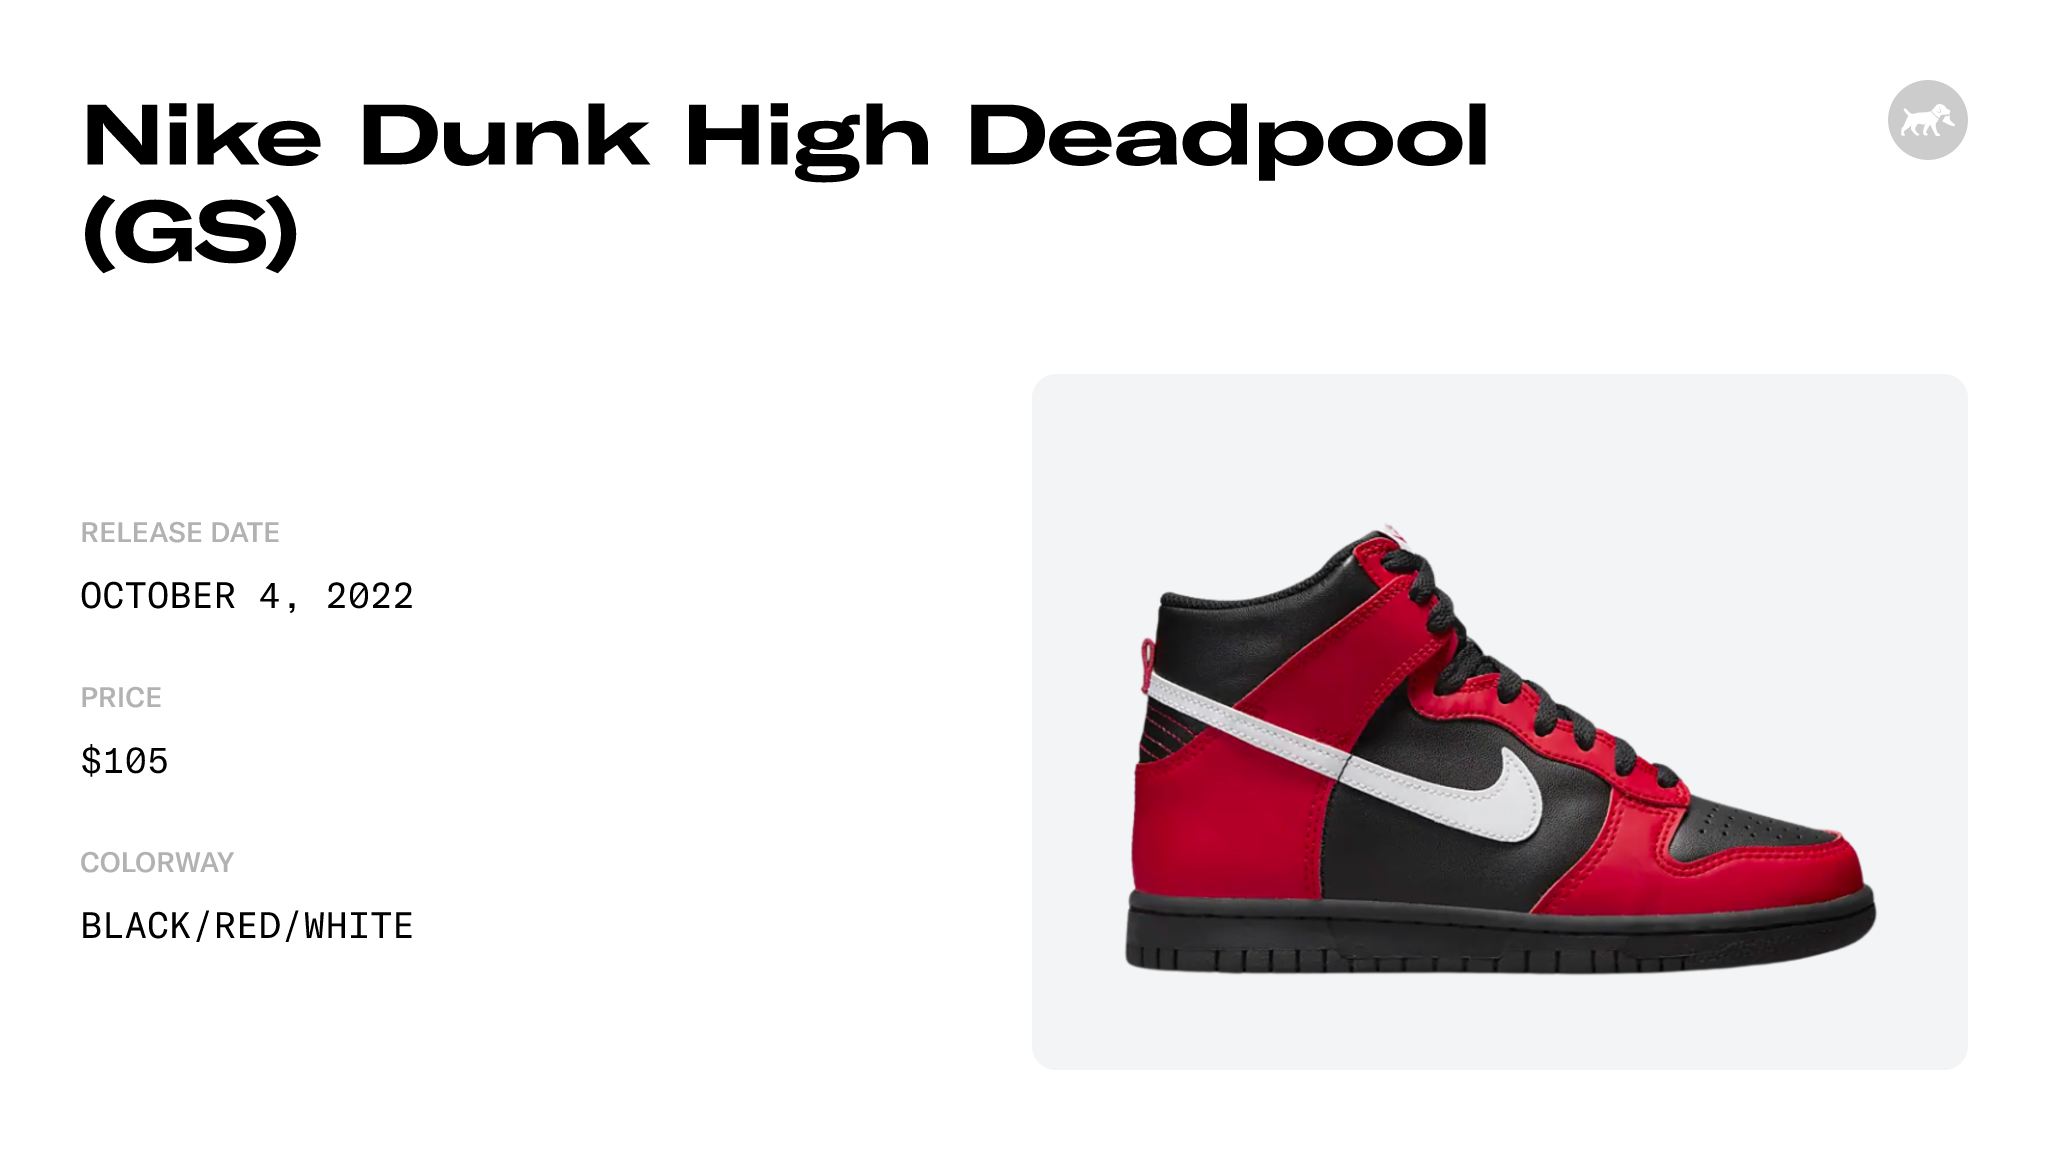 Nike Dunk High Deadpool (GS) - DB2179-003 Raffles and Release Date